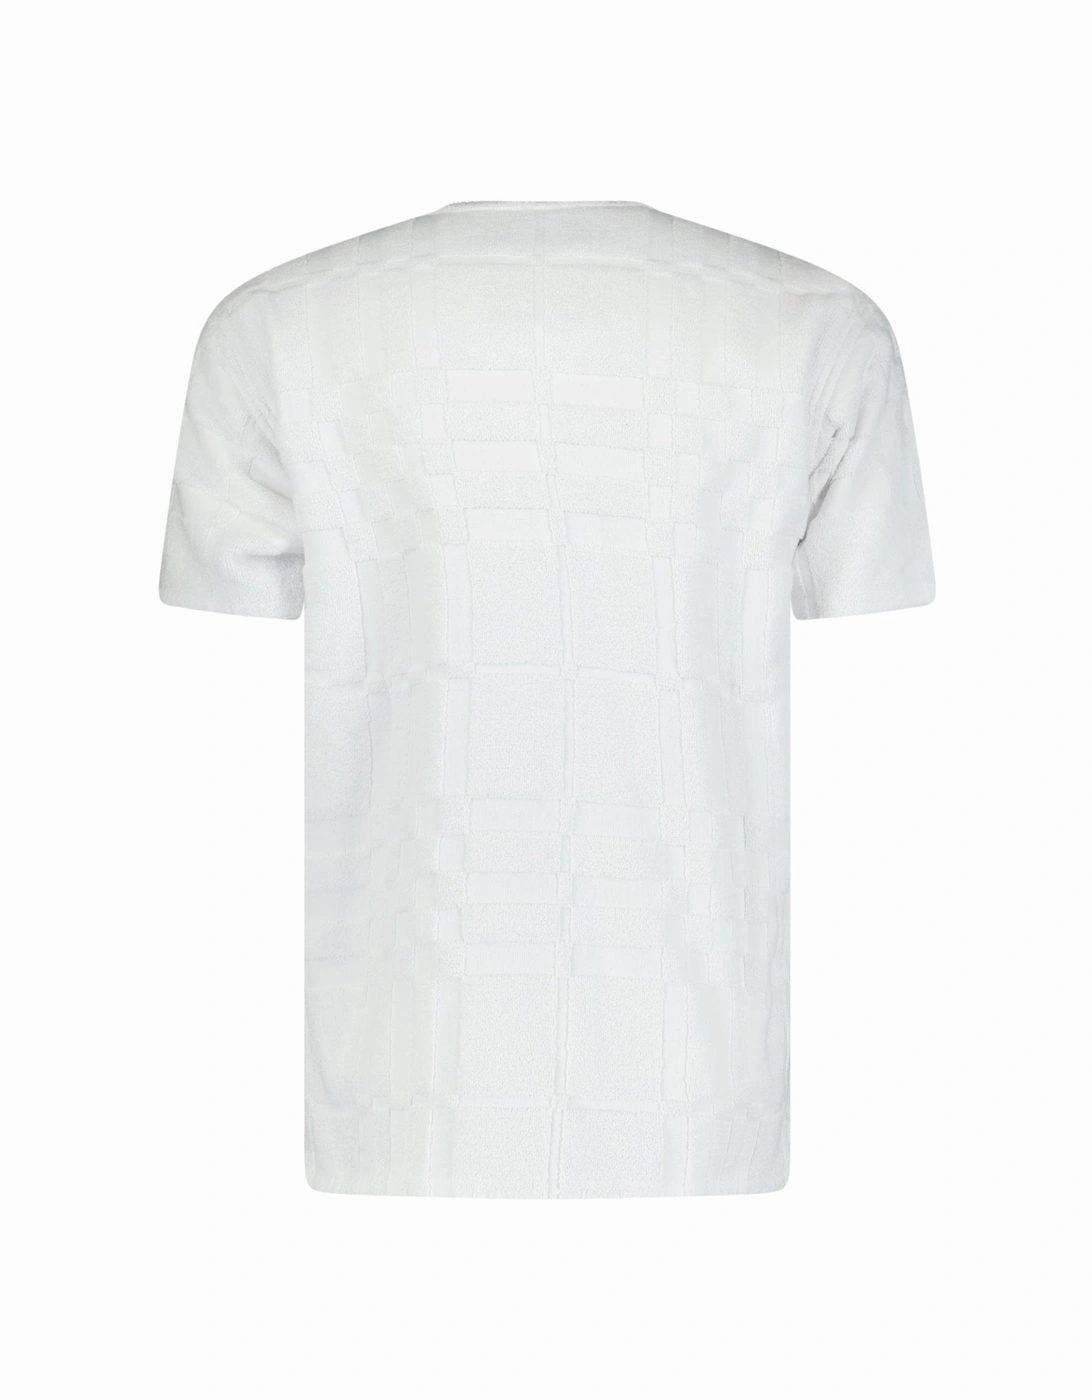 'Willesden' Check Knit Cotton Terry T-Shirt White